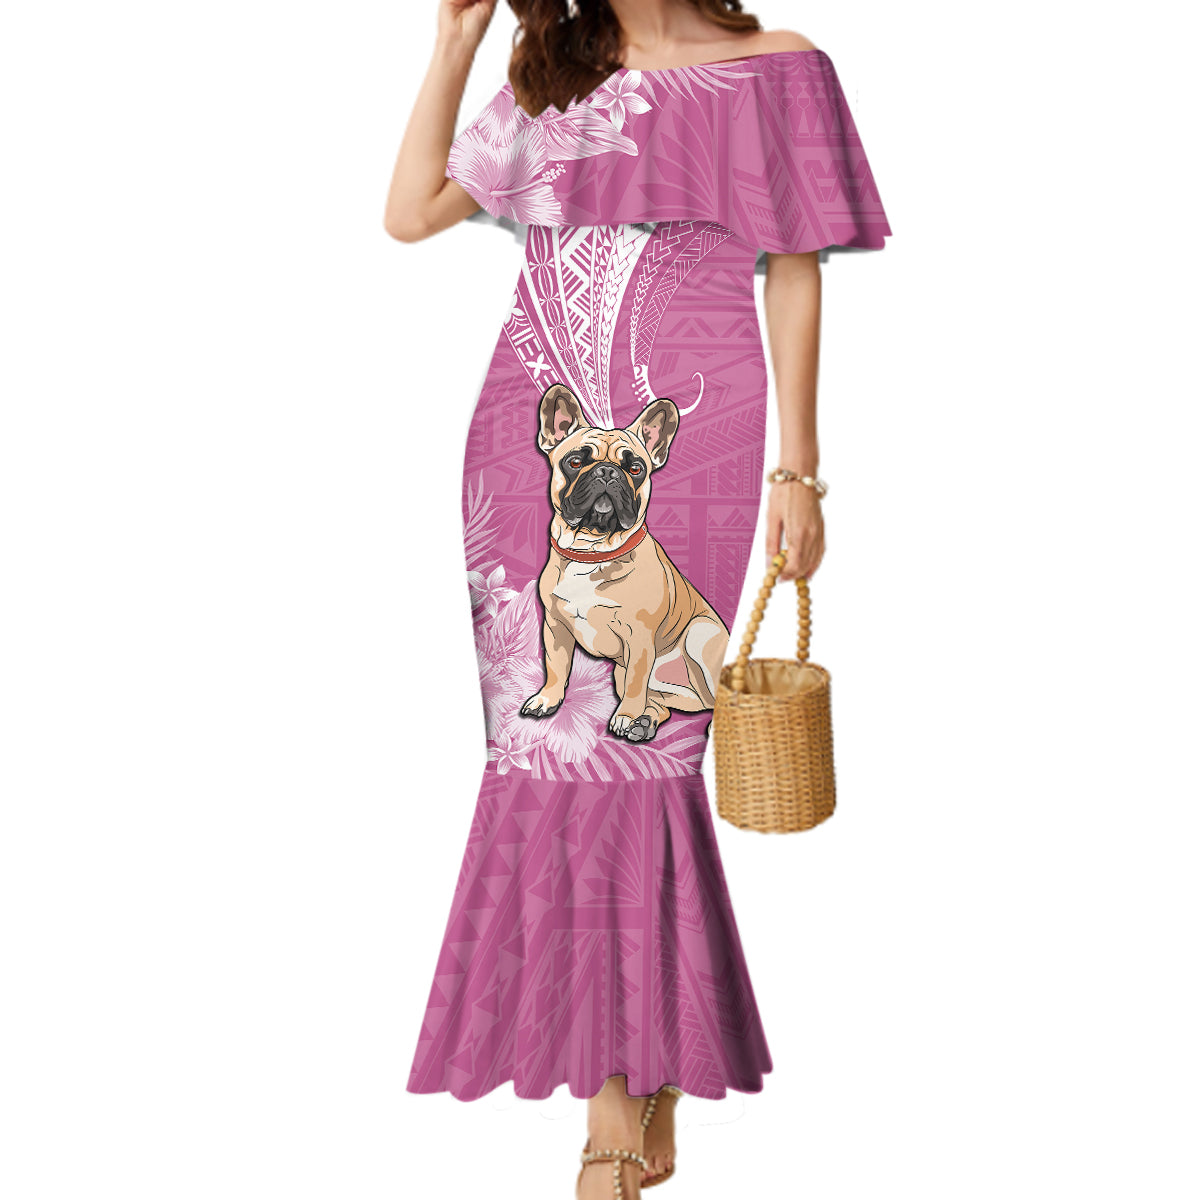 Personalised Polynesian Pacific Bulldog Mermaid Dress With Pink Hawaii Tribal Tattoo Patterns LT7 Women Pink - Polynesian Pride